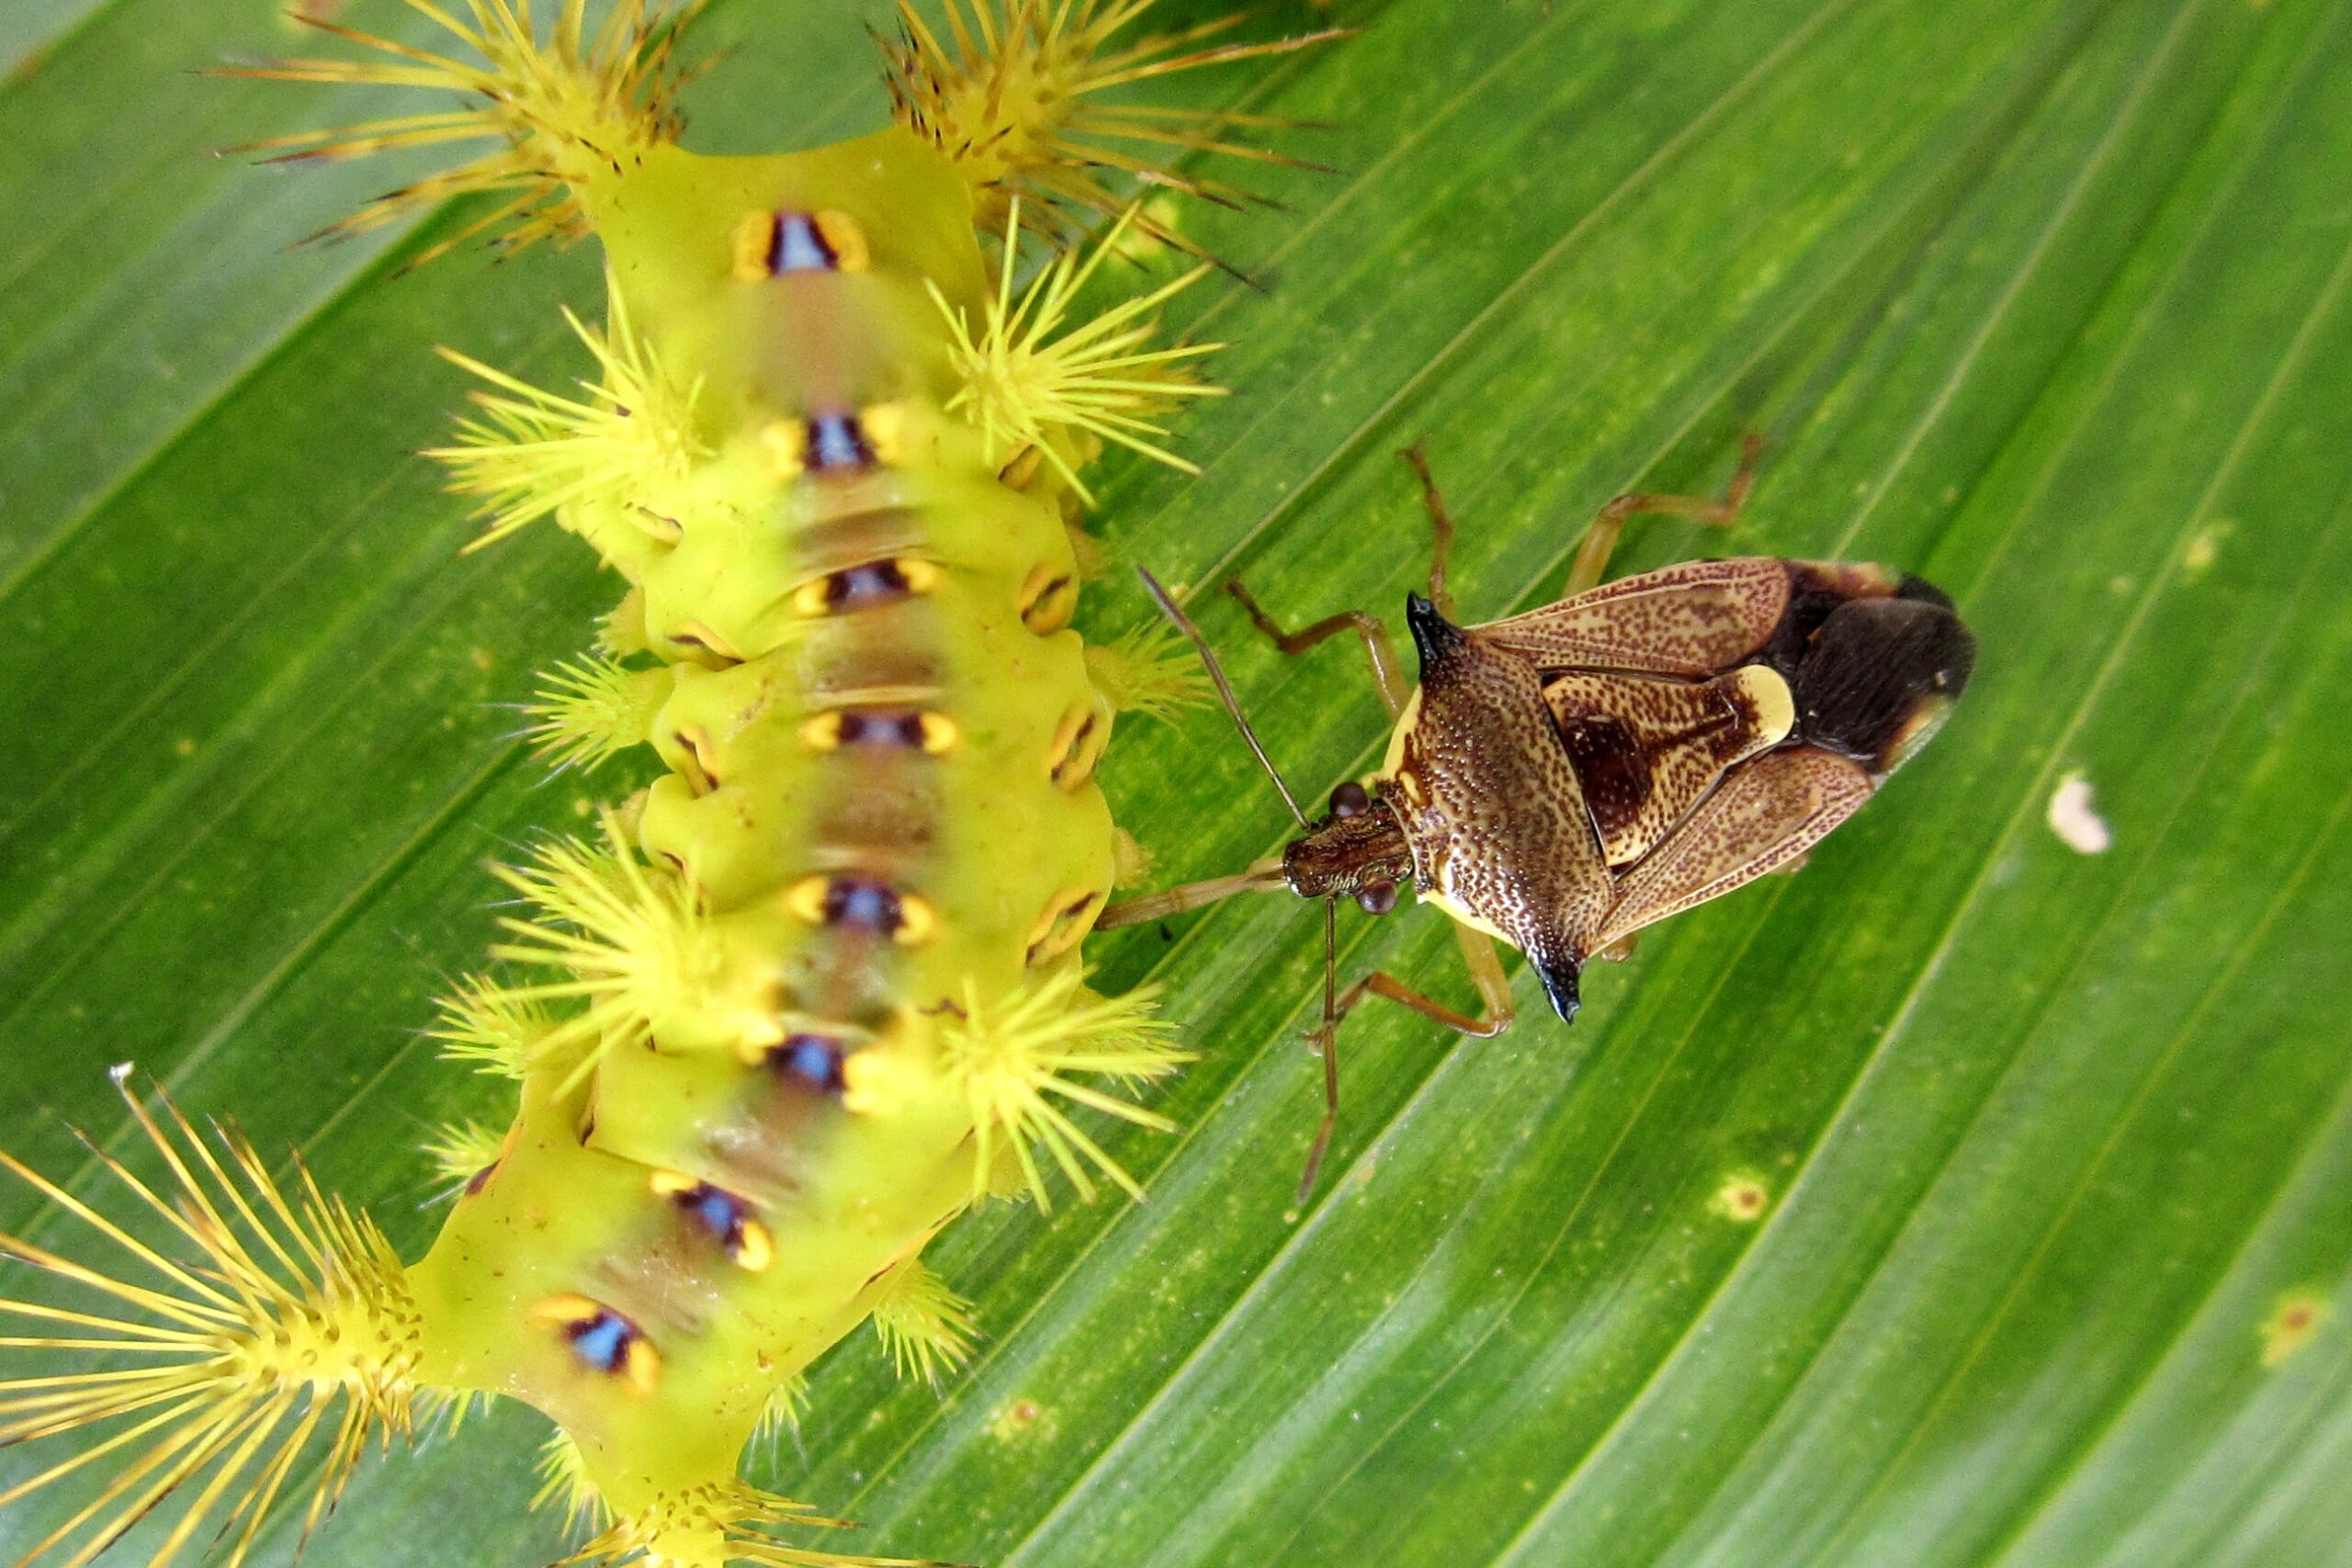 Eocanthecona furcellata eating nettle caterpillar